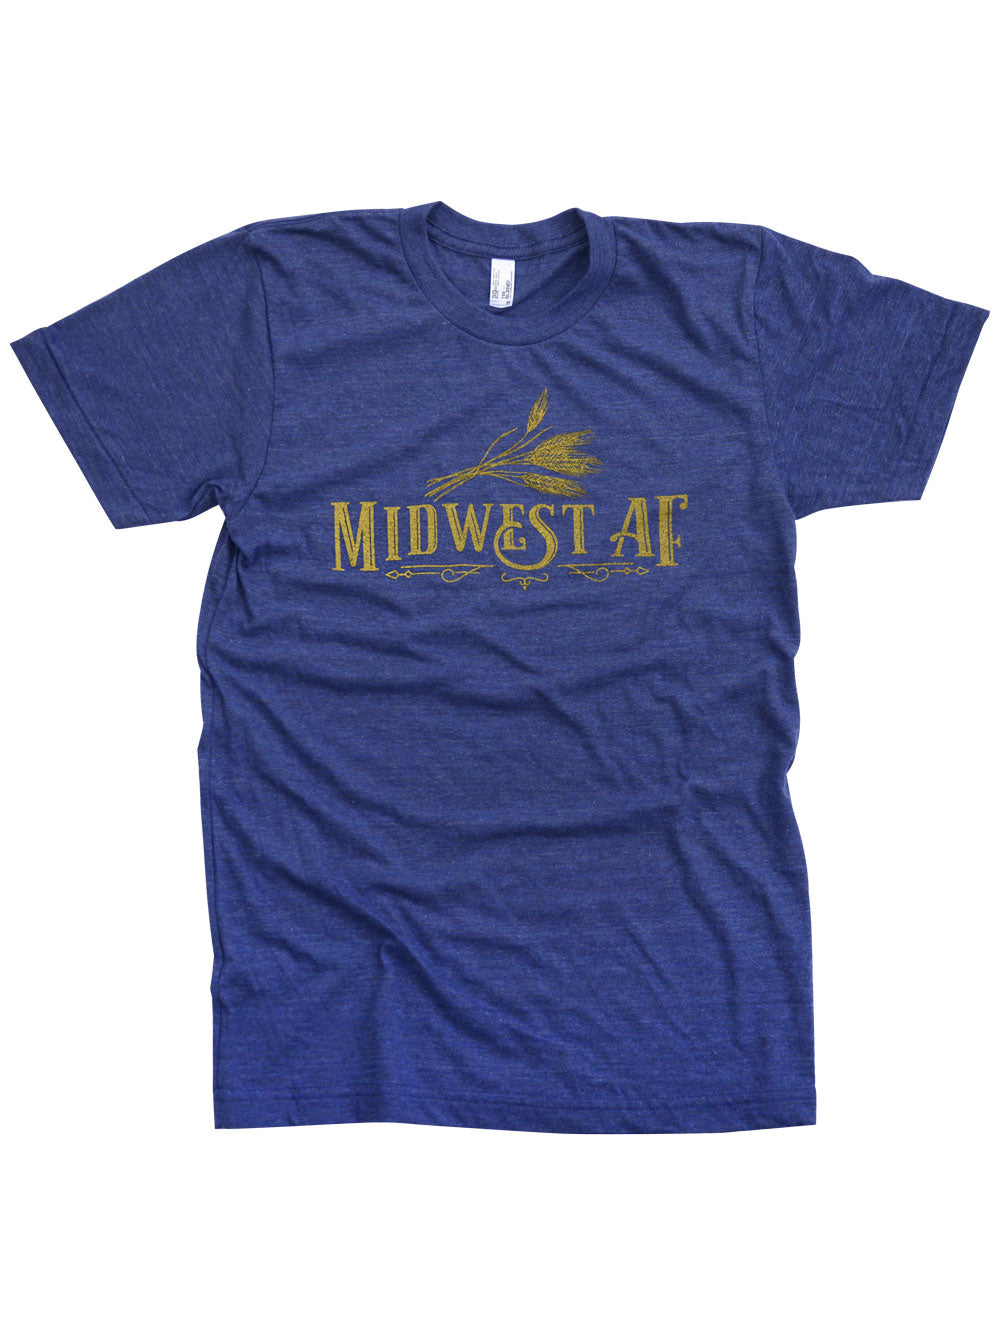 Midwest AF indigo heather t-shirt